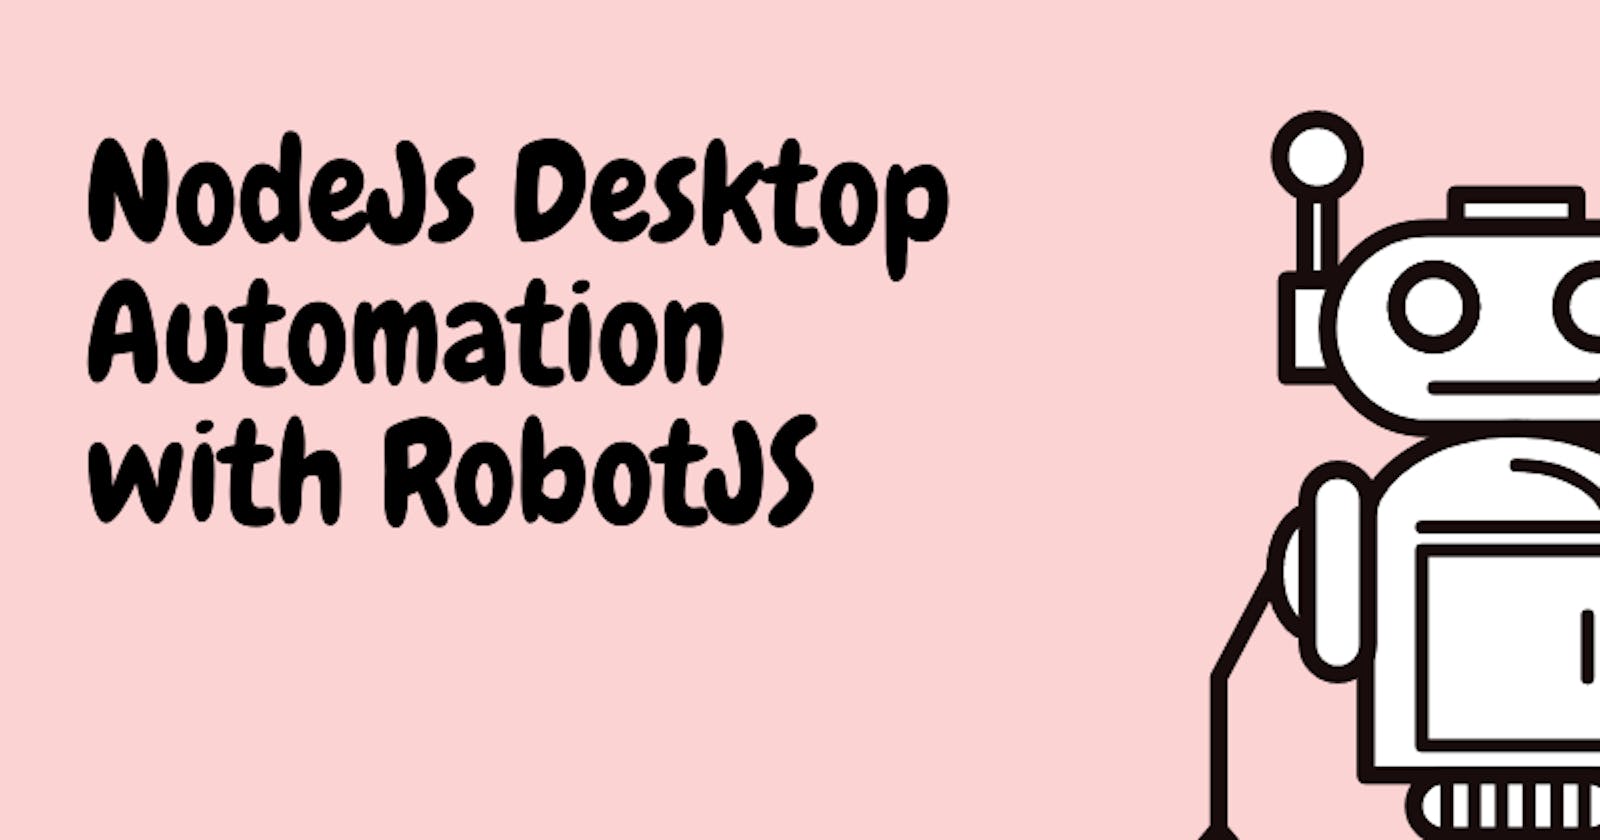 NodeJS Desktop Automation with RobotJS, (but with a program that could get you h̶i̶r̶e̶d̶ fired😄)